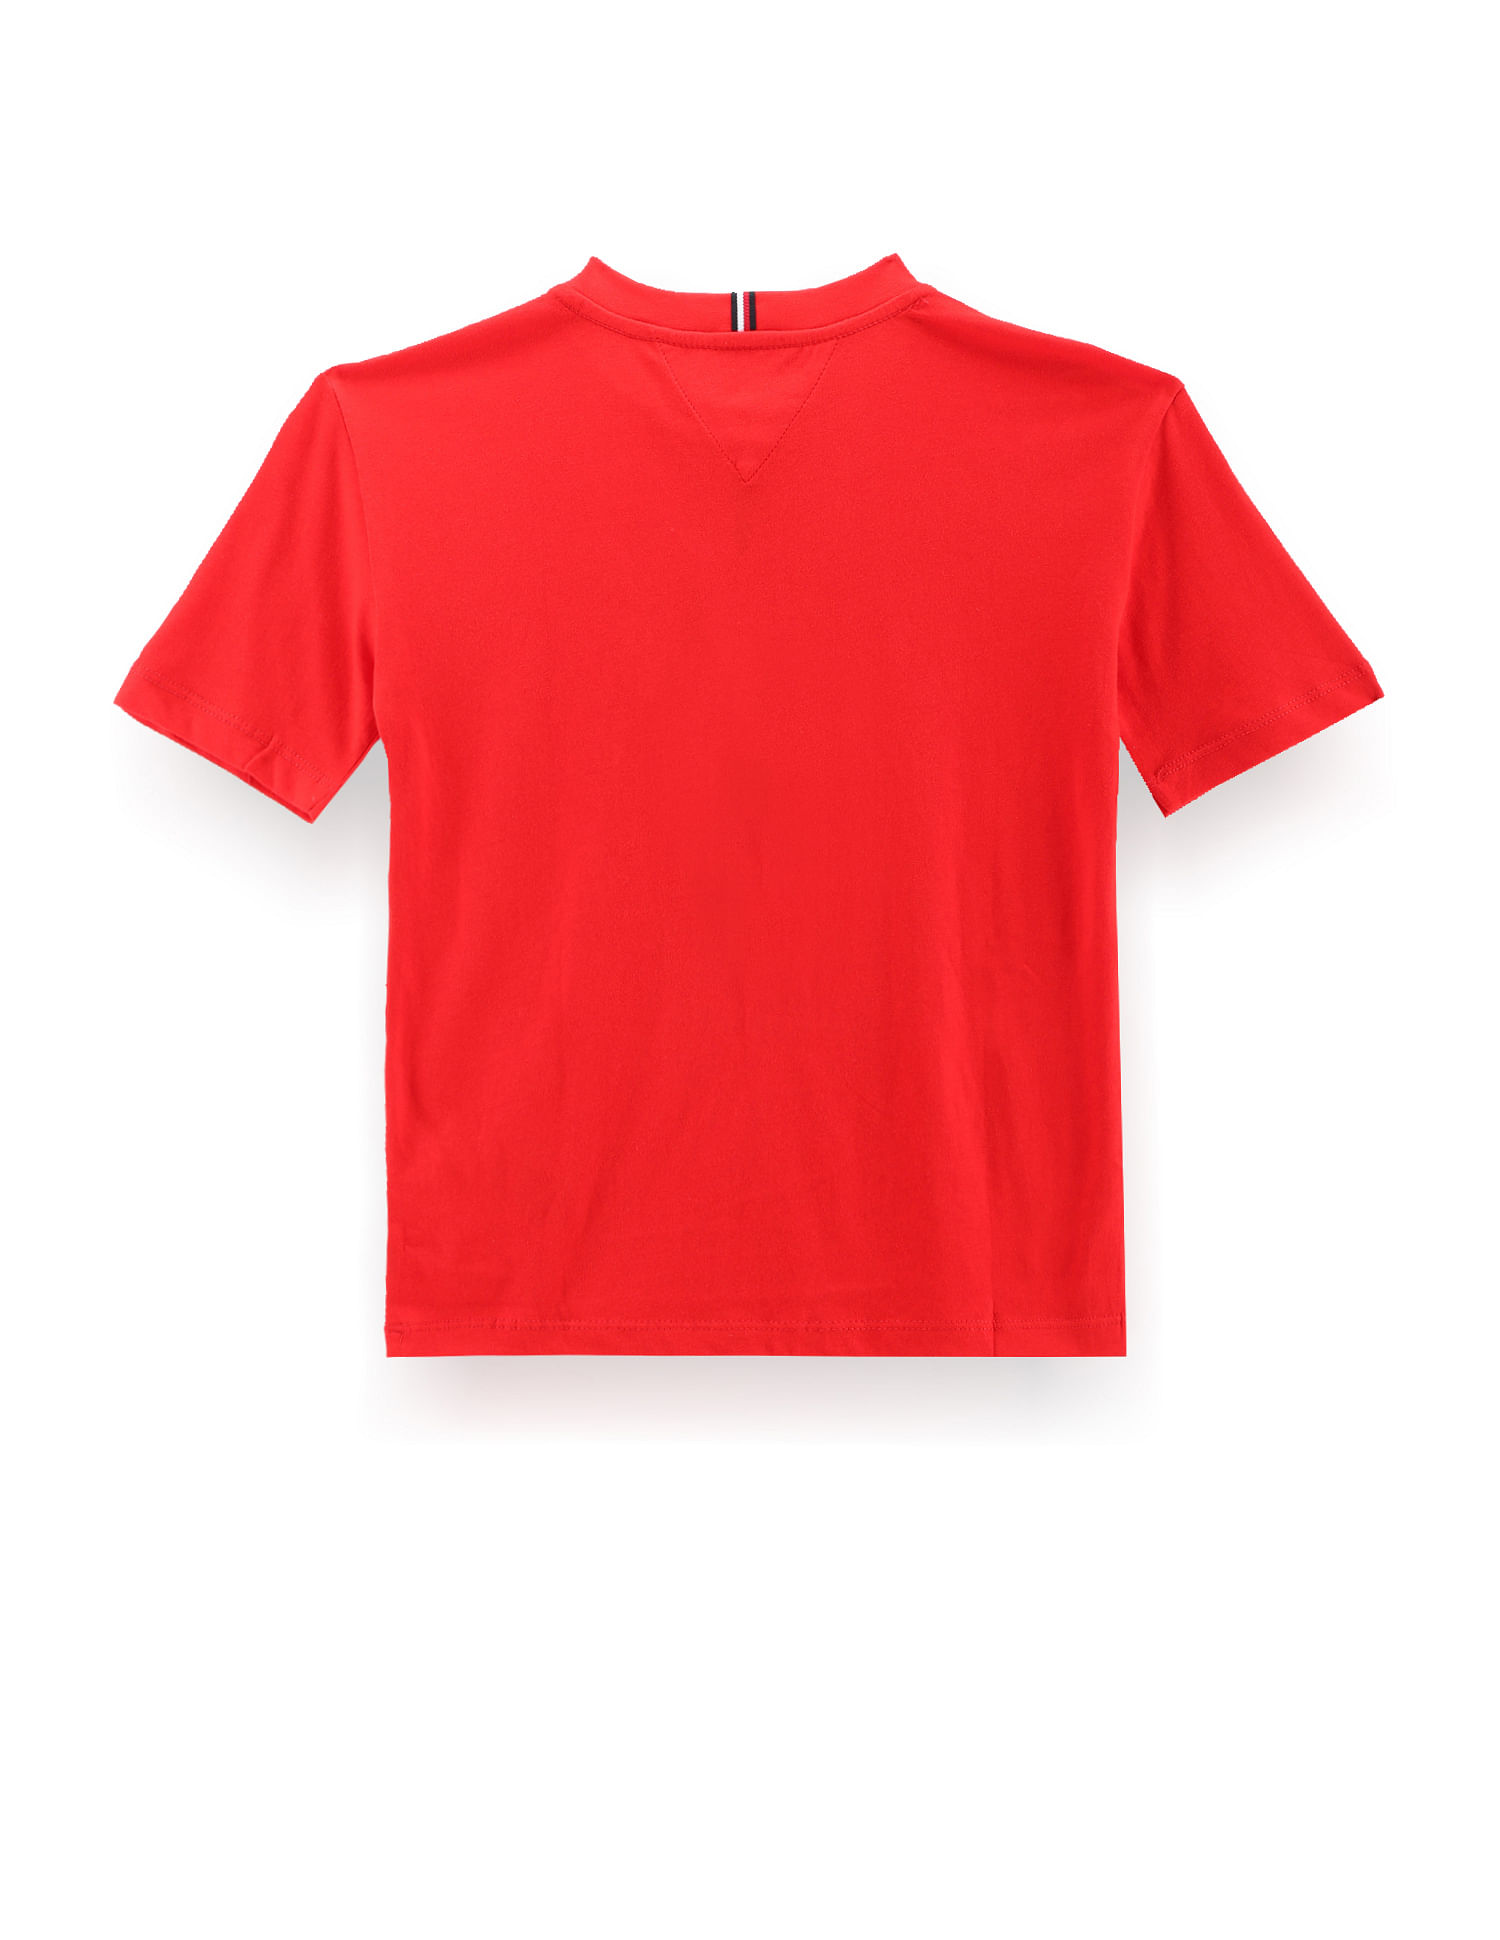 Buy Tommy Hilfiger Kids Boys Solid Essential T-Shirt